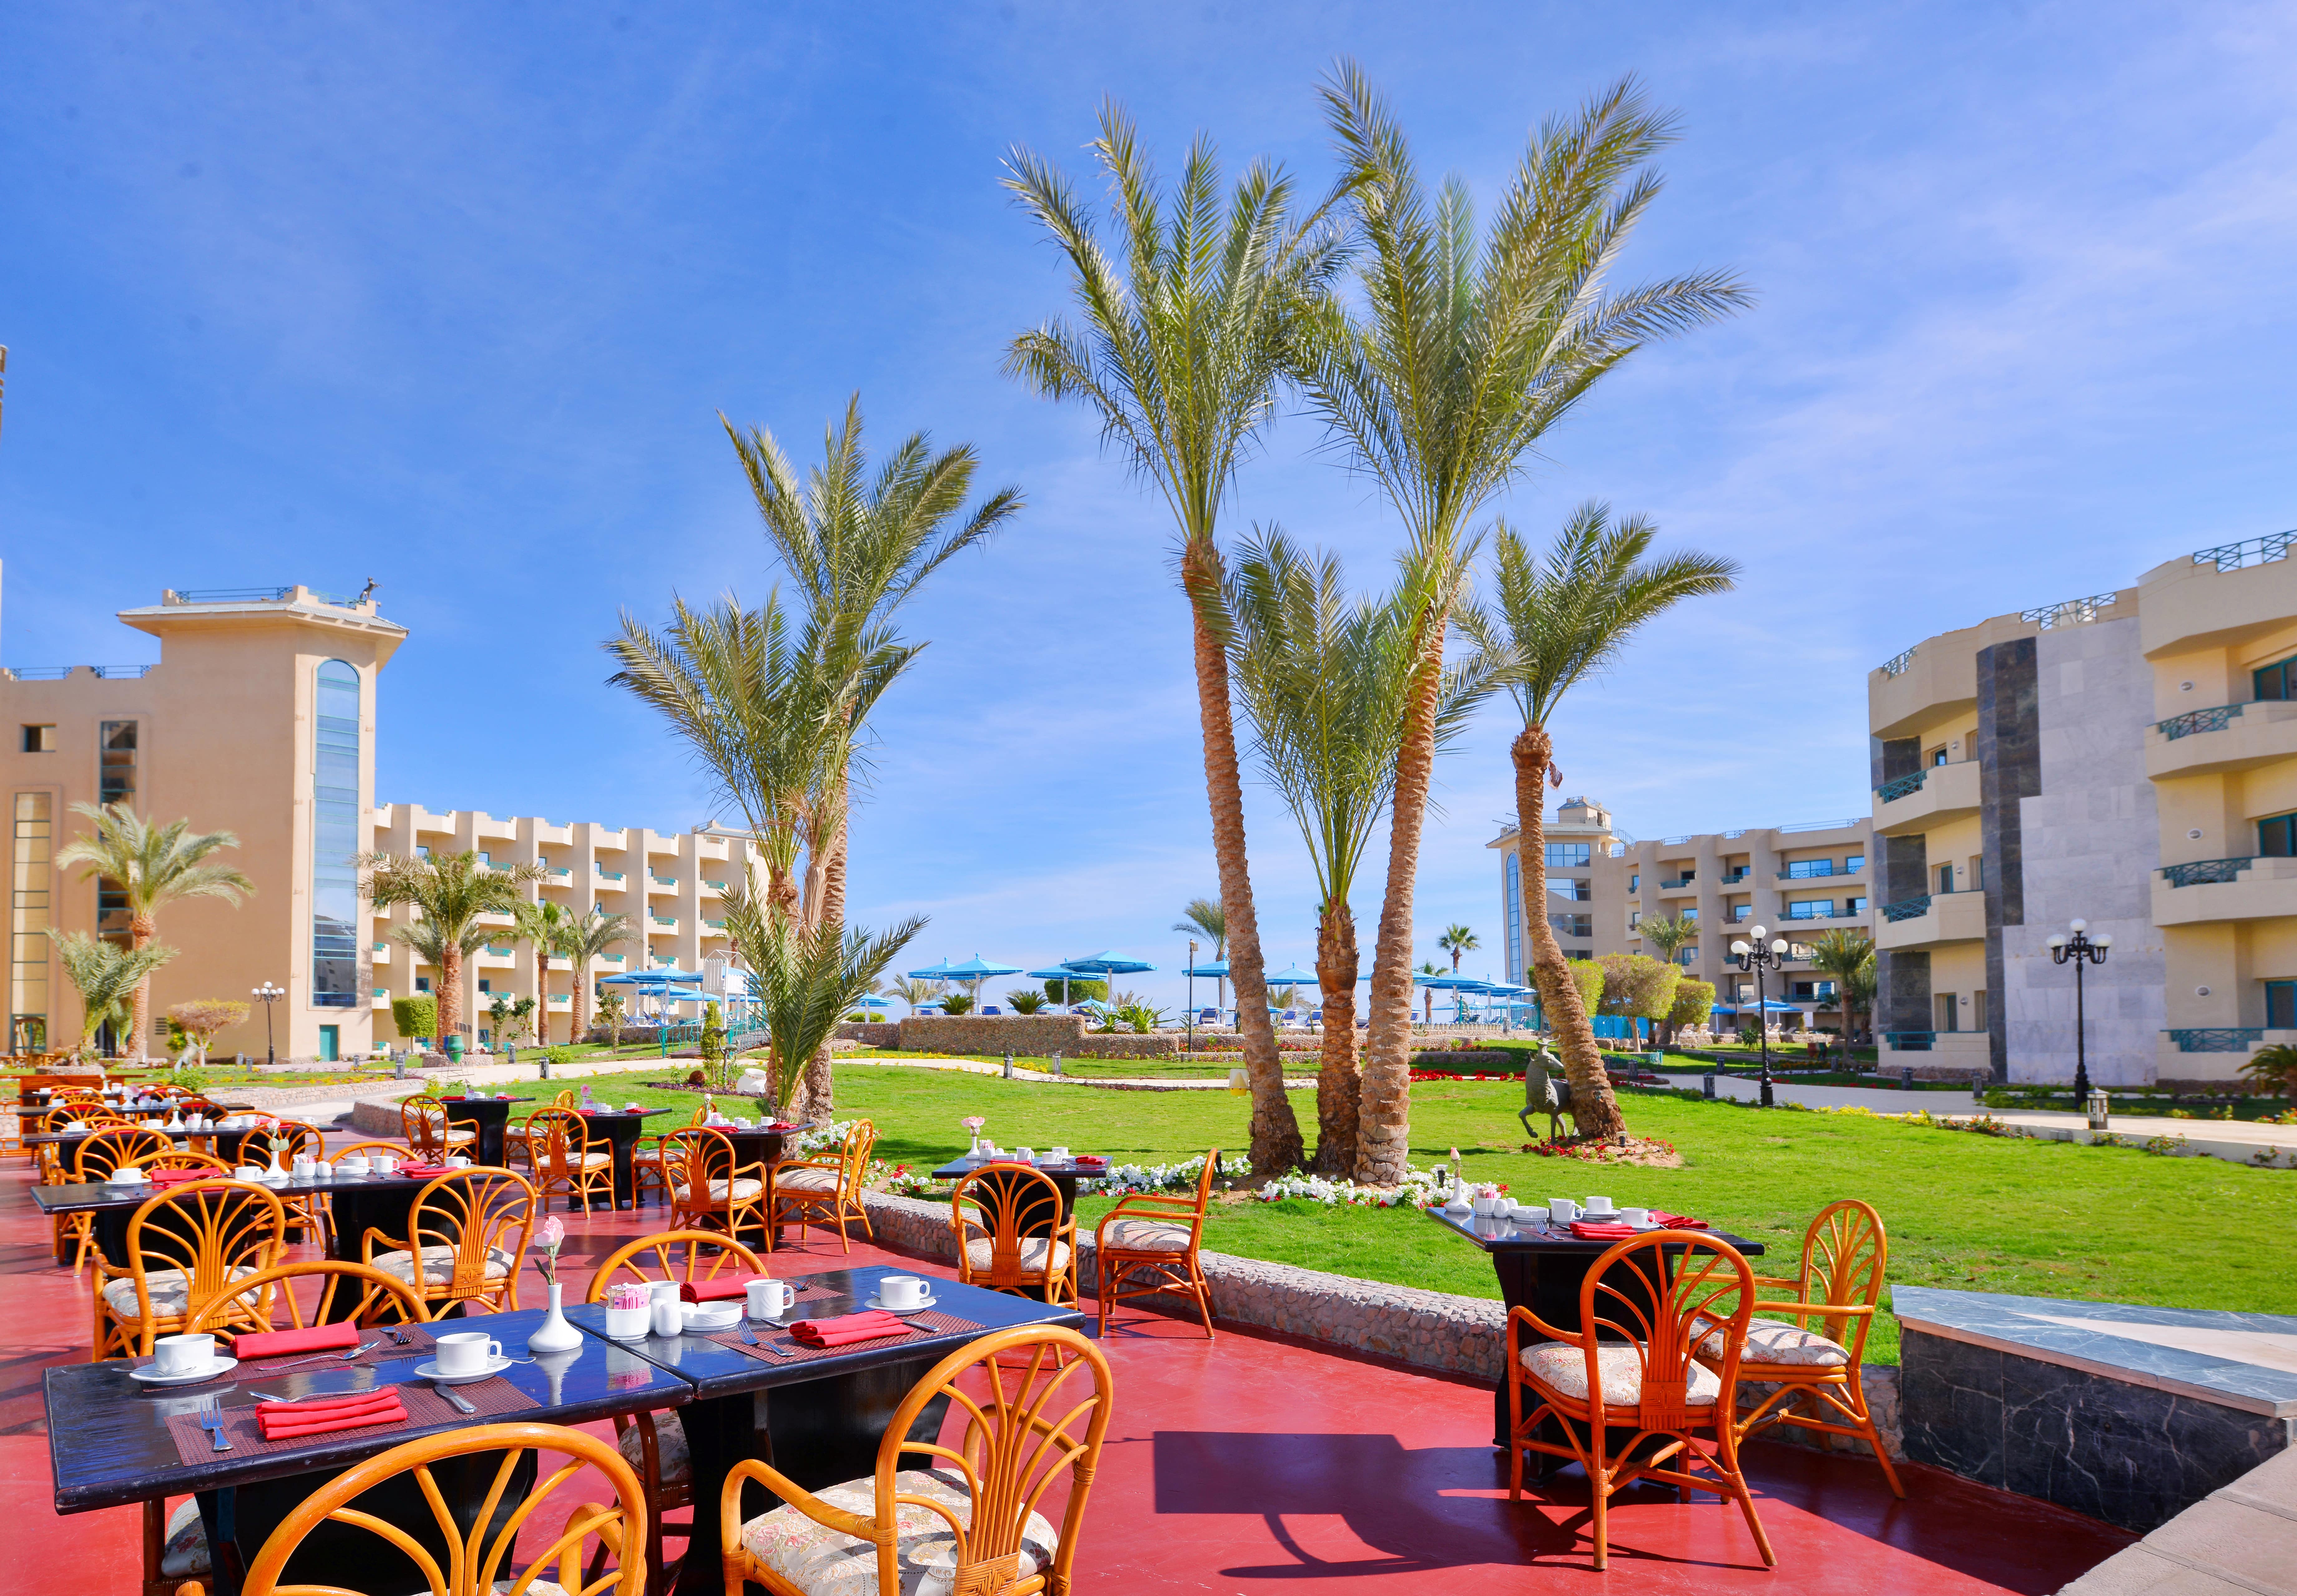 Серри хургада. Hotelux Marina Beach Resort Хургада. Египет Хургада Гранд Горизонт. Хургада Египет Гранд отель 4 звезды.